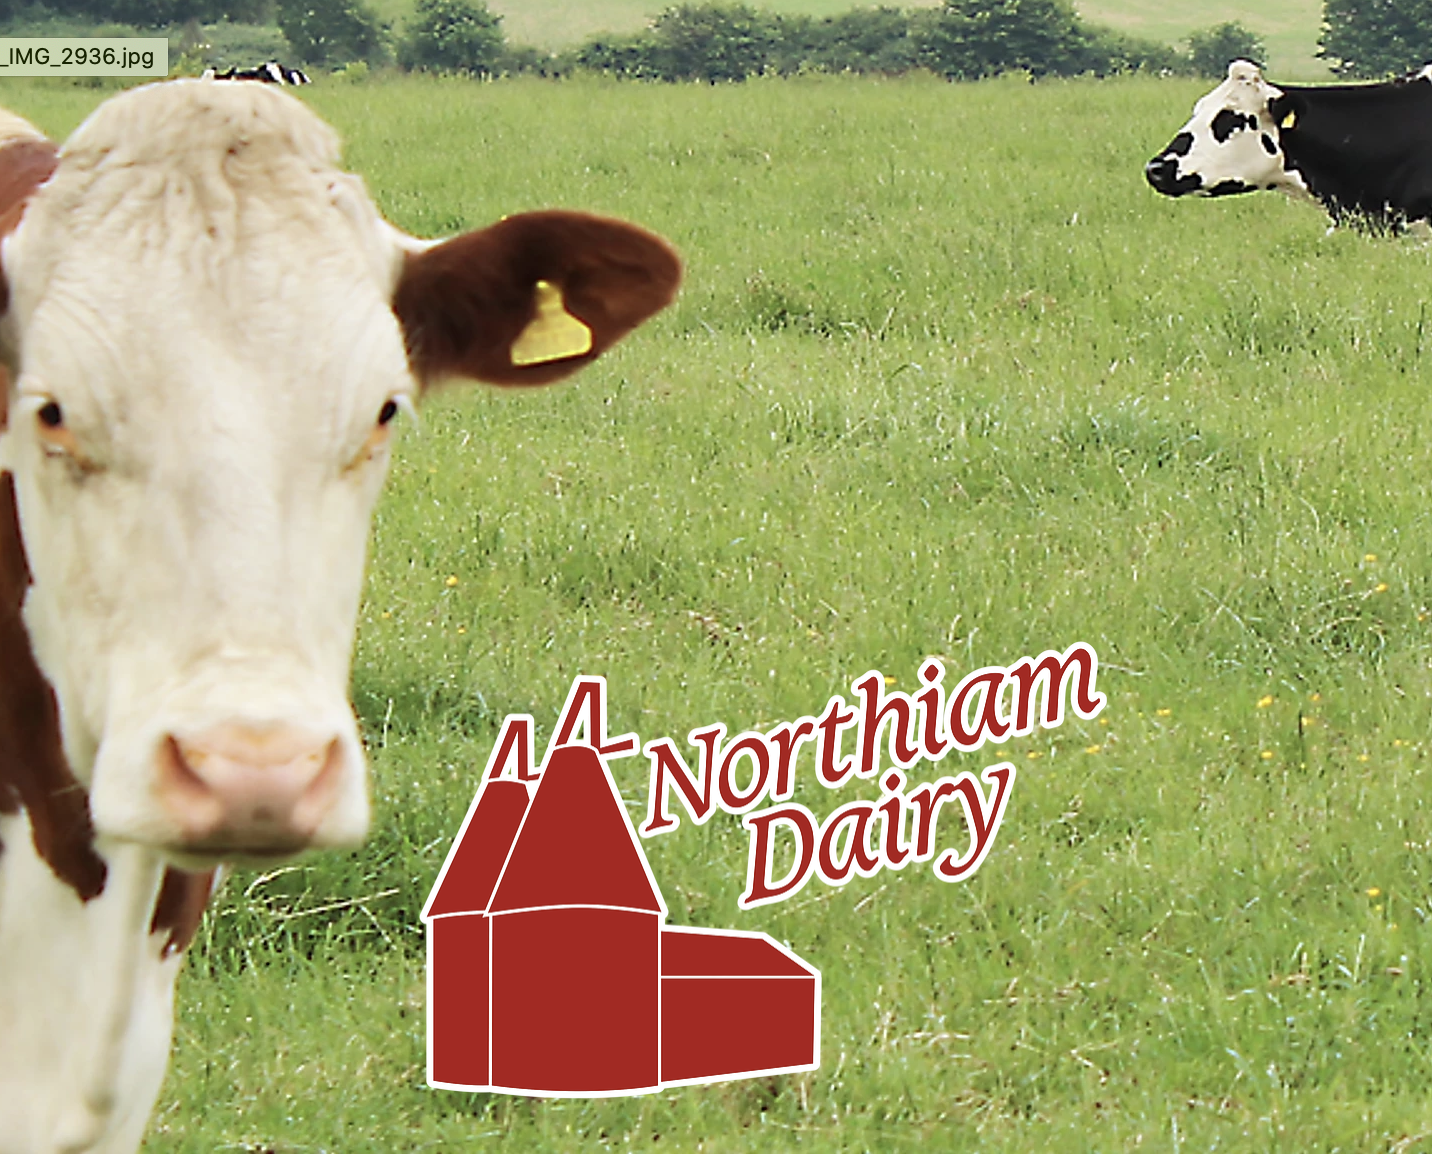 Northiam Dairy Cows